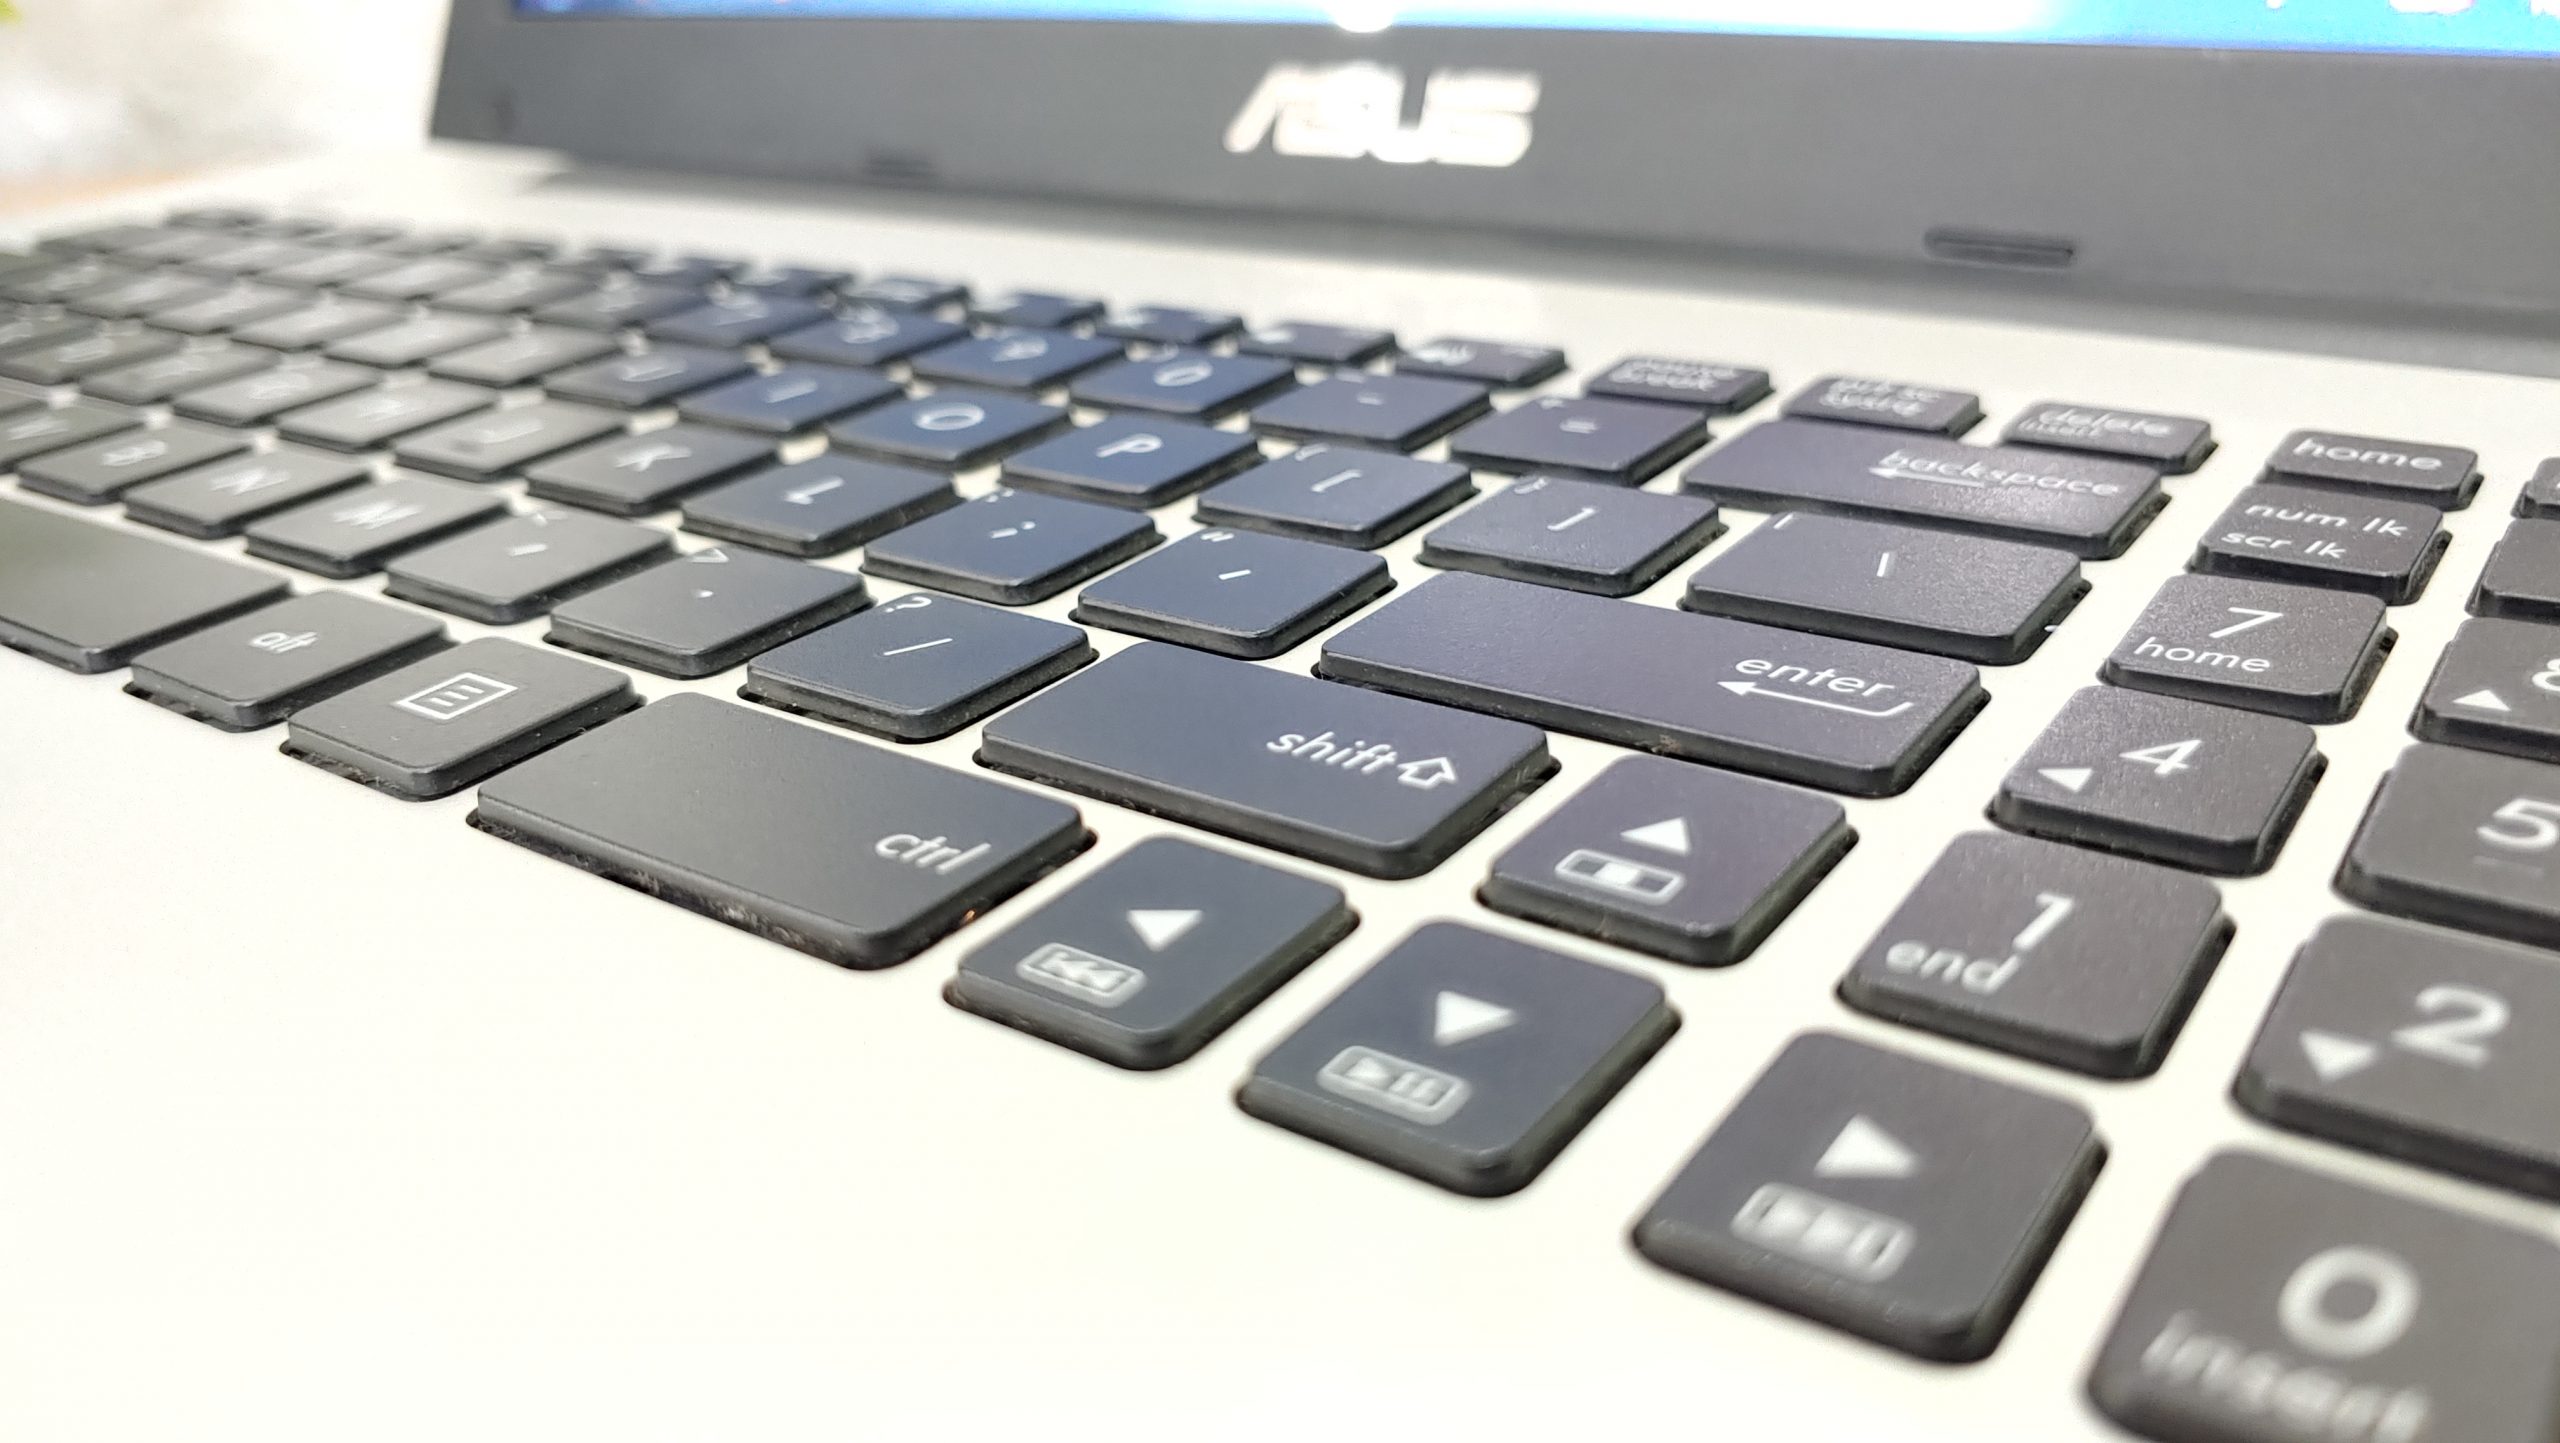 Laptop Asus K555L